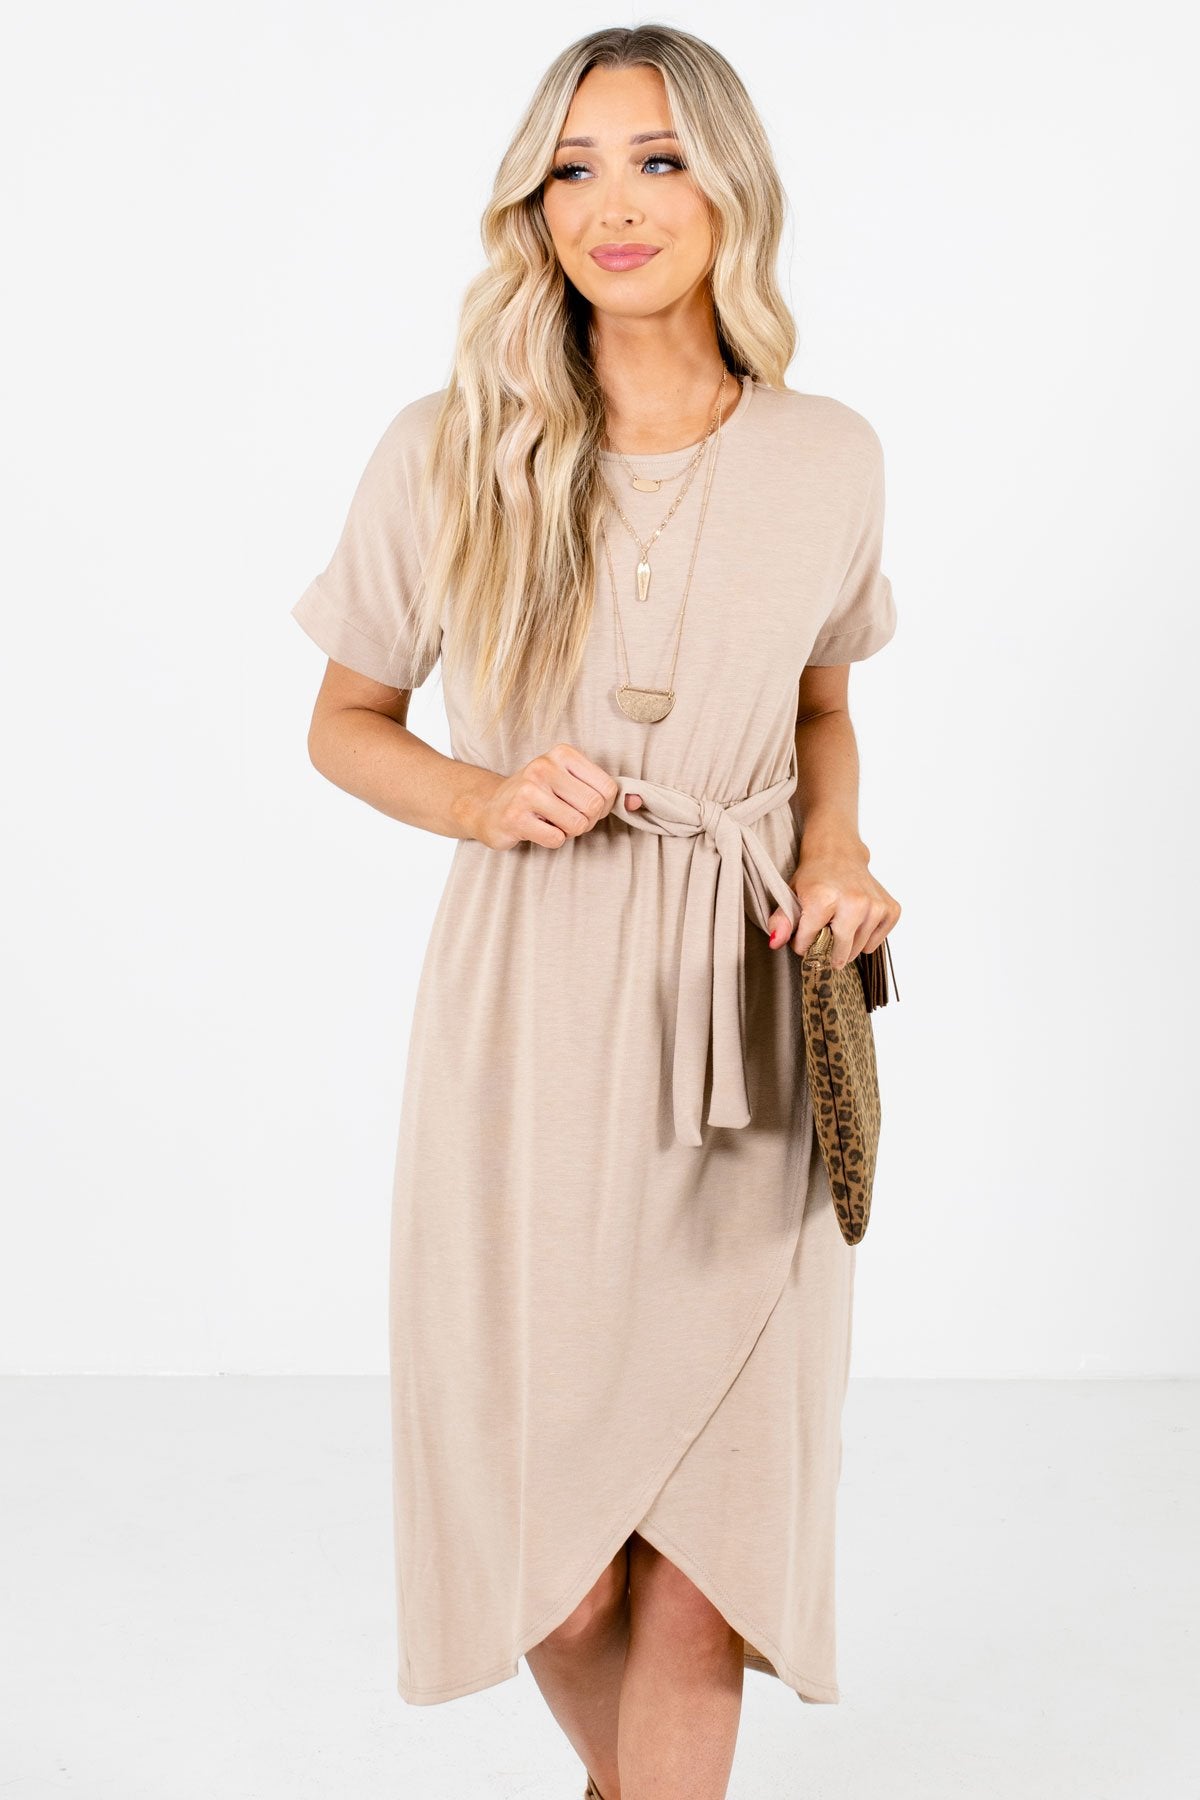 Brown Faux Wrap Style Boutique Knee-Length Dresses for Women